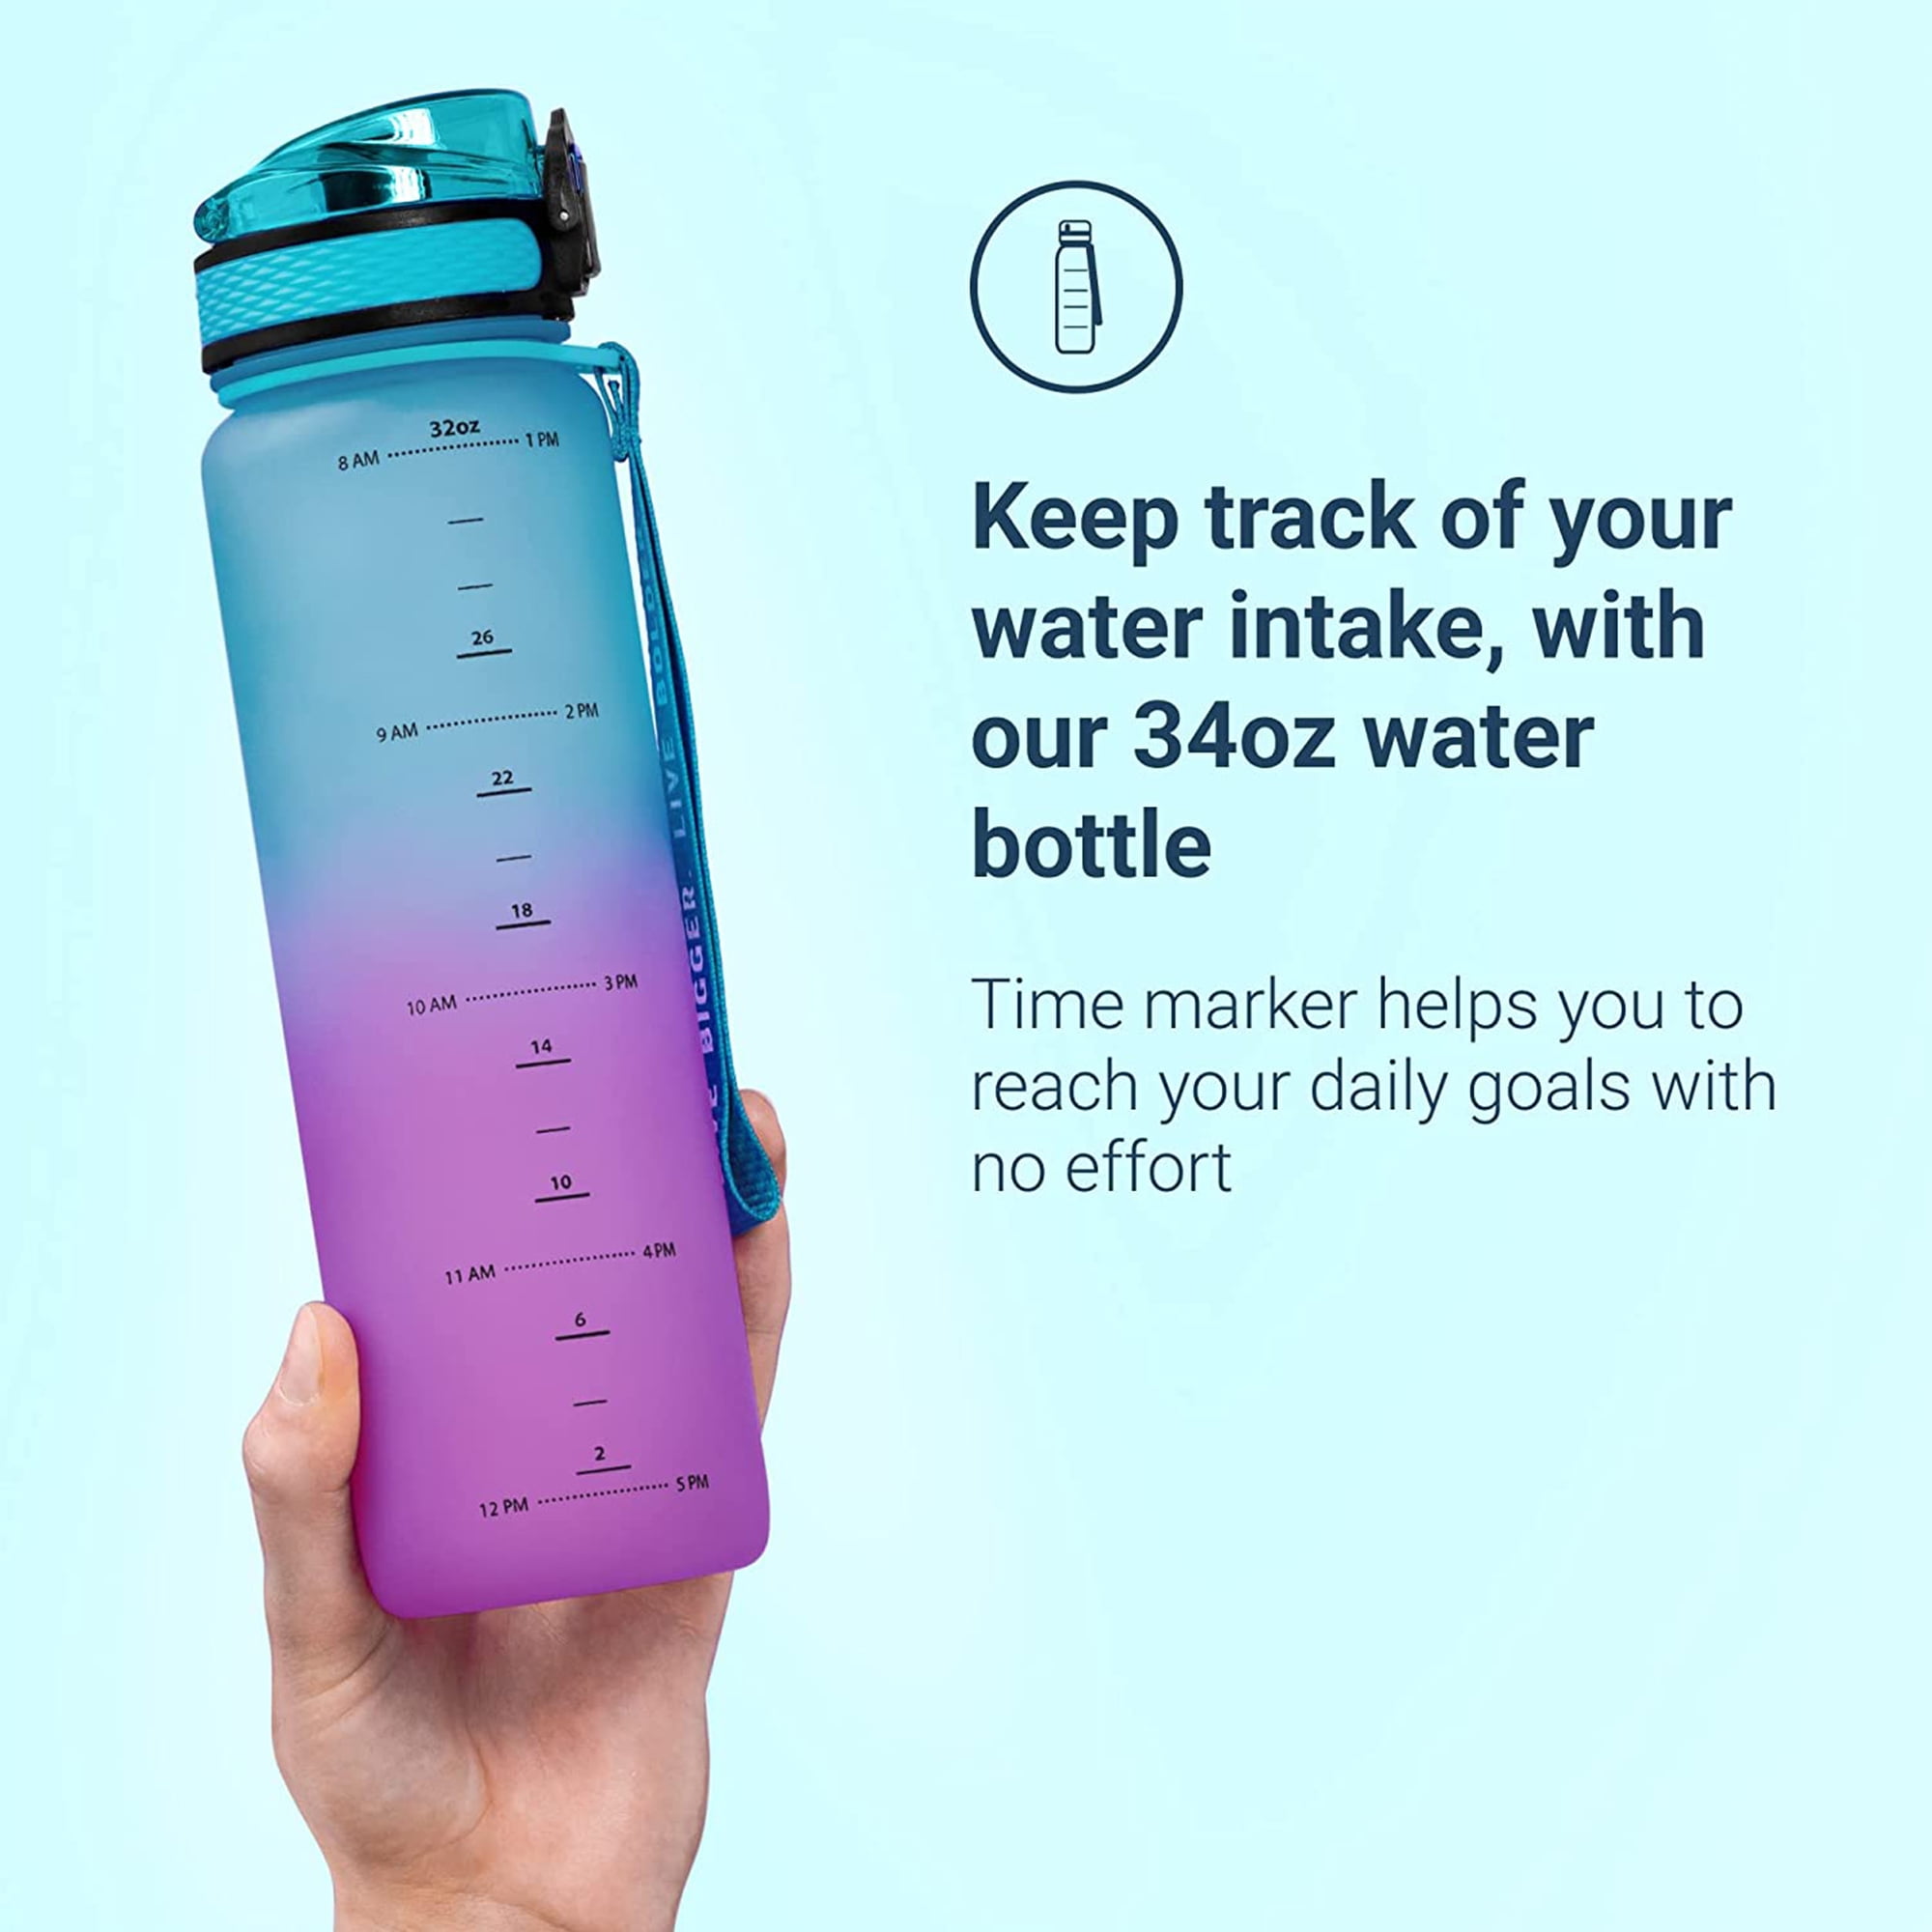 Sport Water Bottle with Timeline Markings & Fruit Infuser - 34oz High Flow Sports Water Bottle by Live Infinitely, Rose Gold